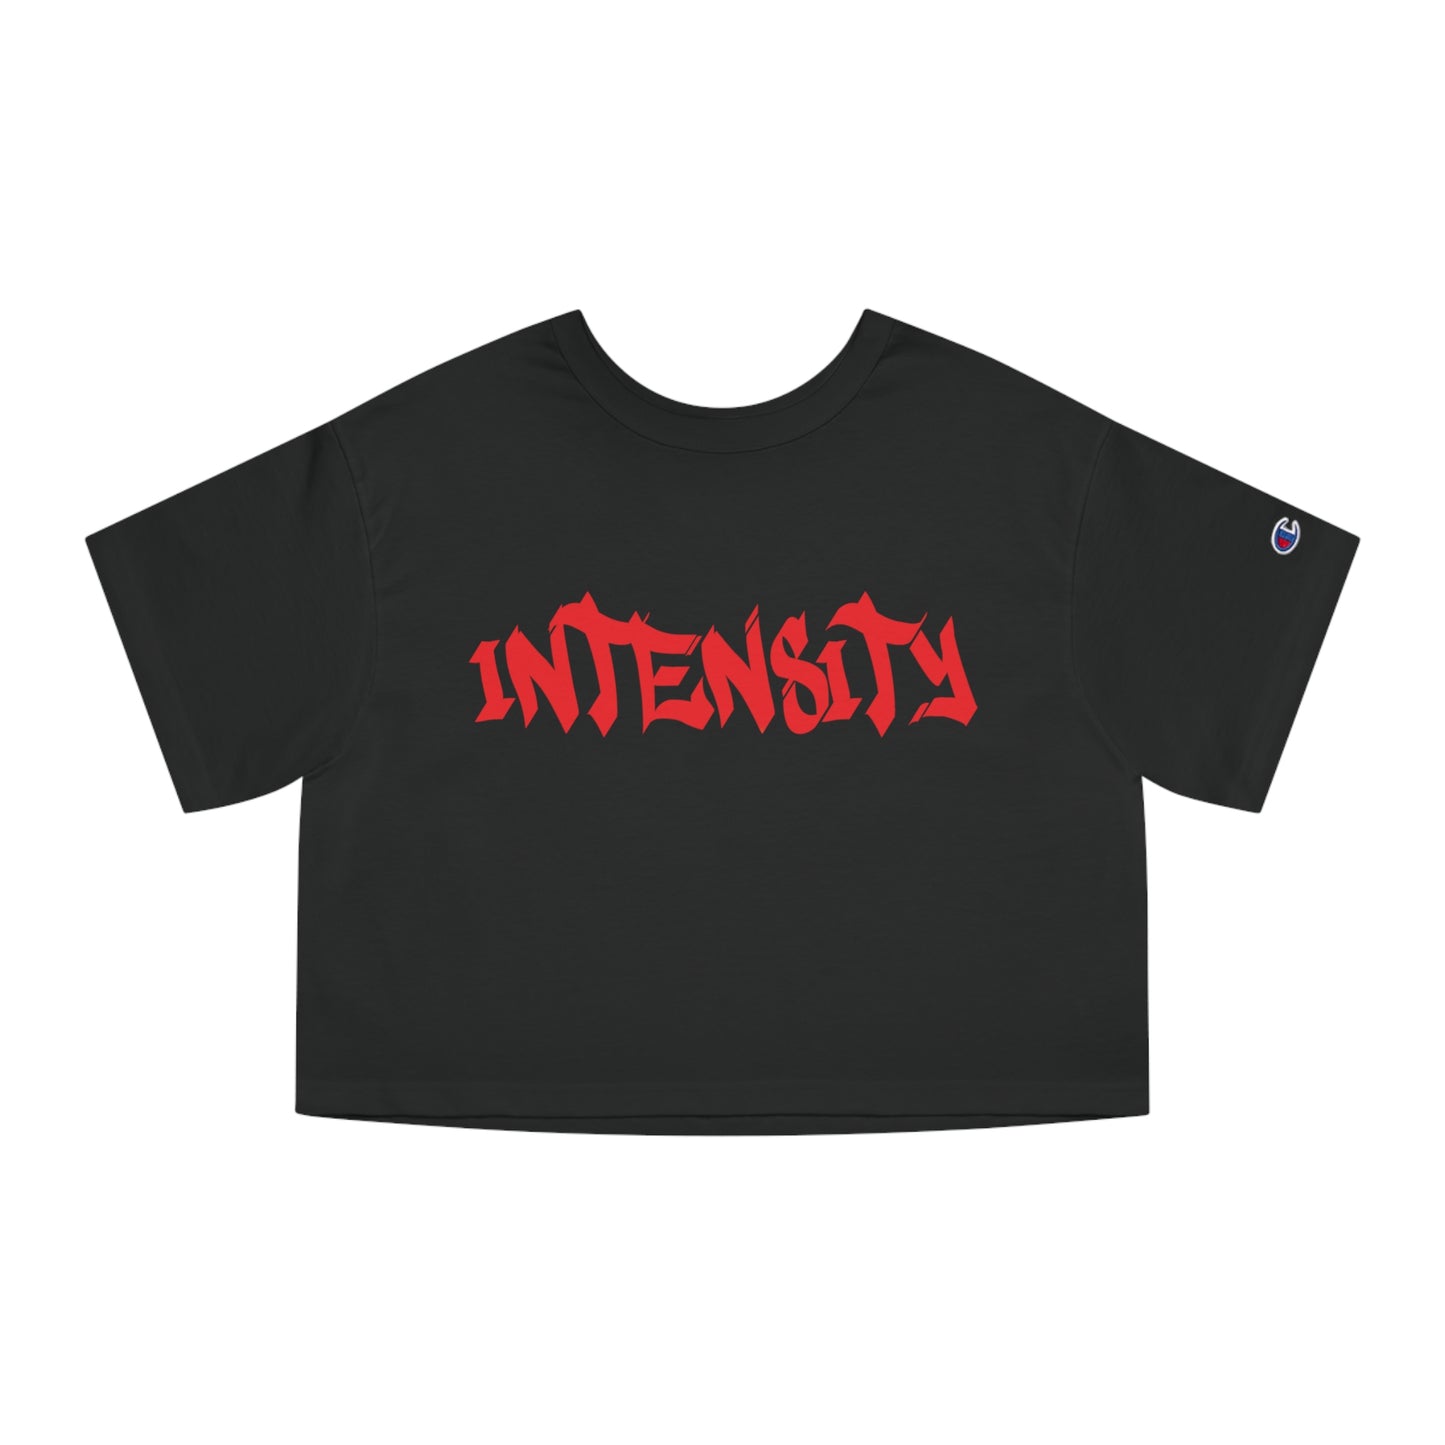 Women's "INTENSITY" Crop Top T-Shirt Red Logo